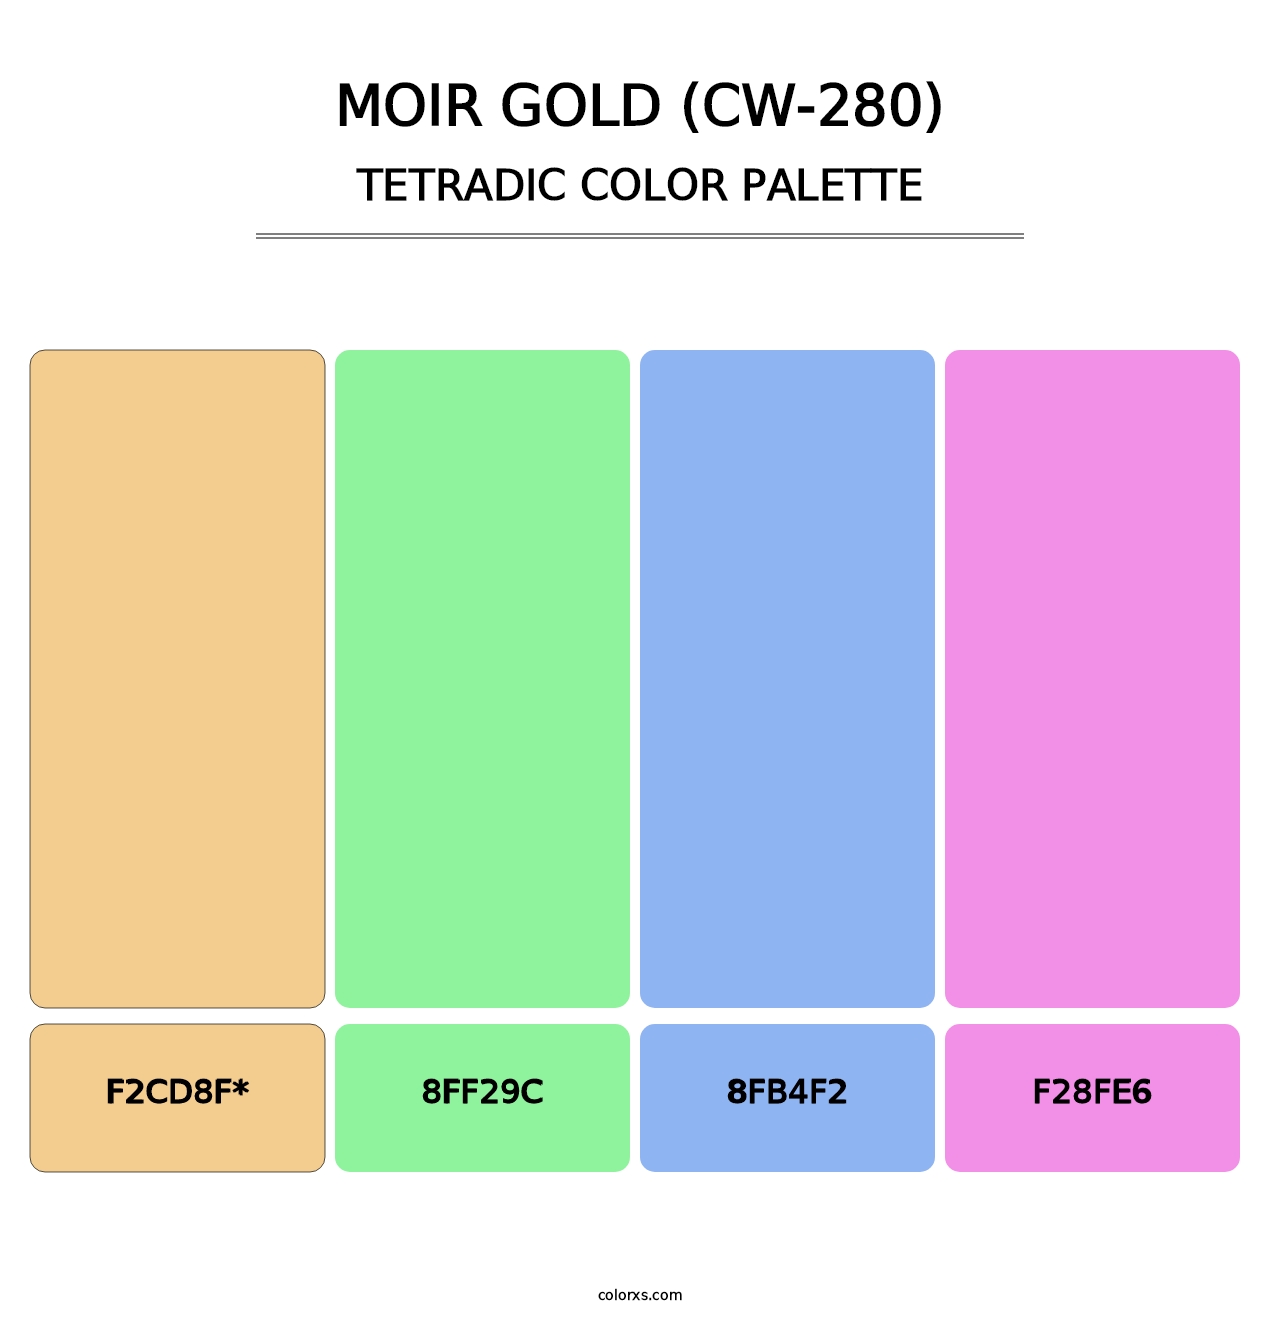 Moir Gold (CW-280) - Tetradic Color Palette